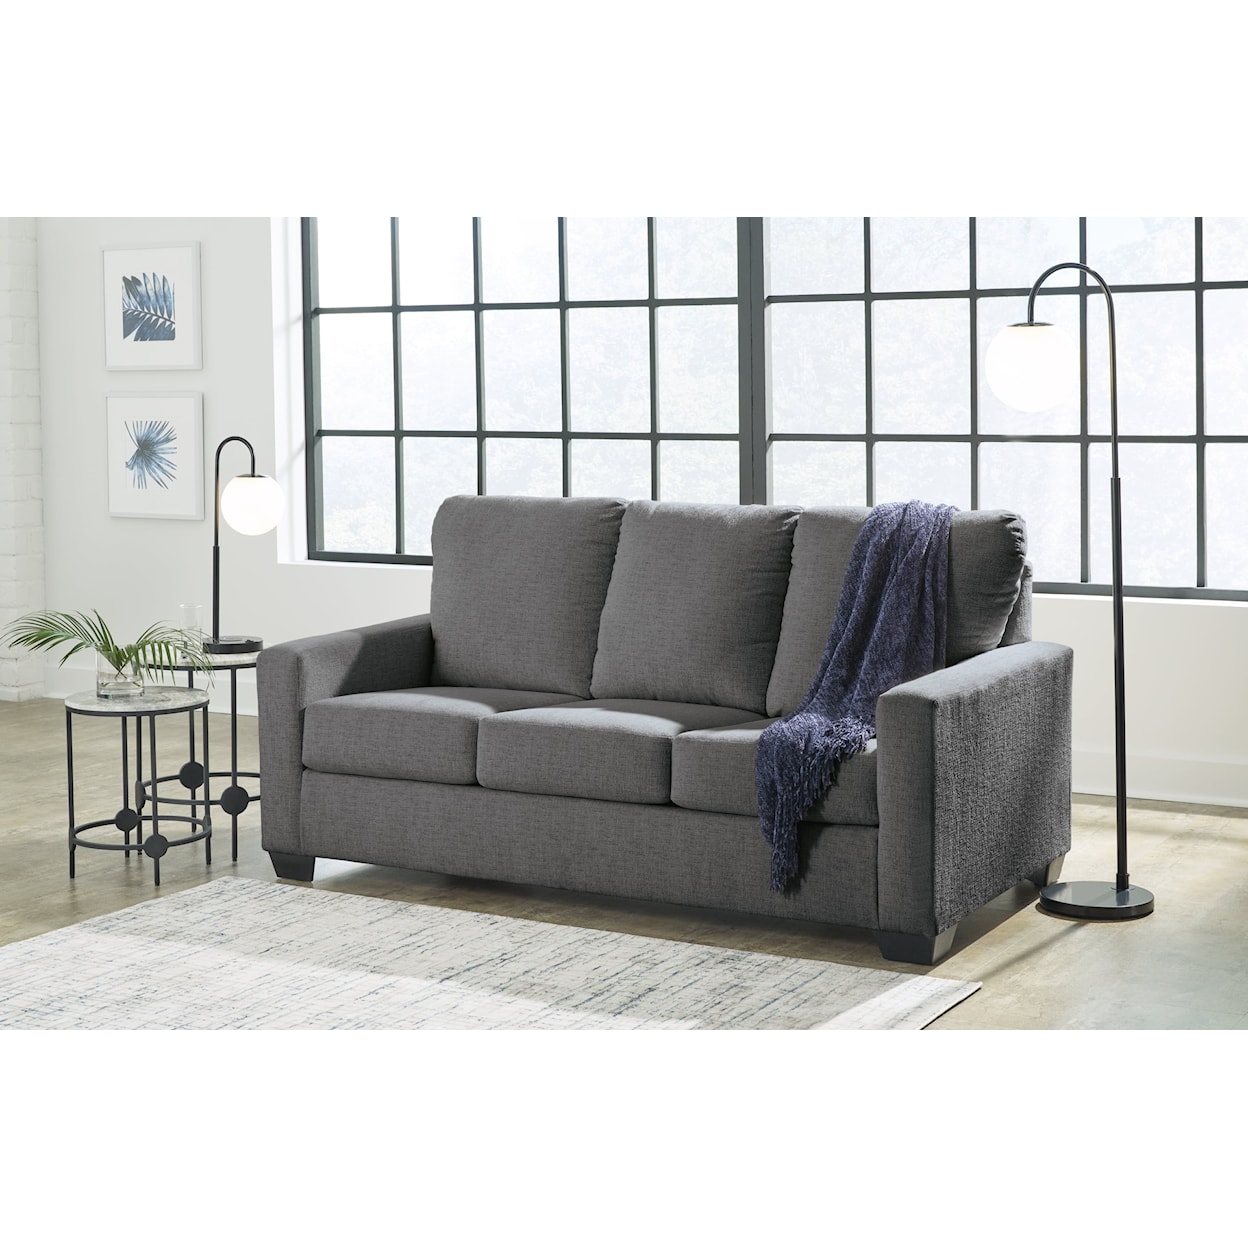 Signature Design by Ashley Furniture Rannis Full Sleeper Sofa